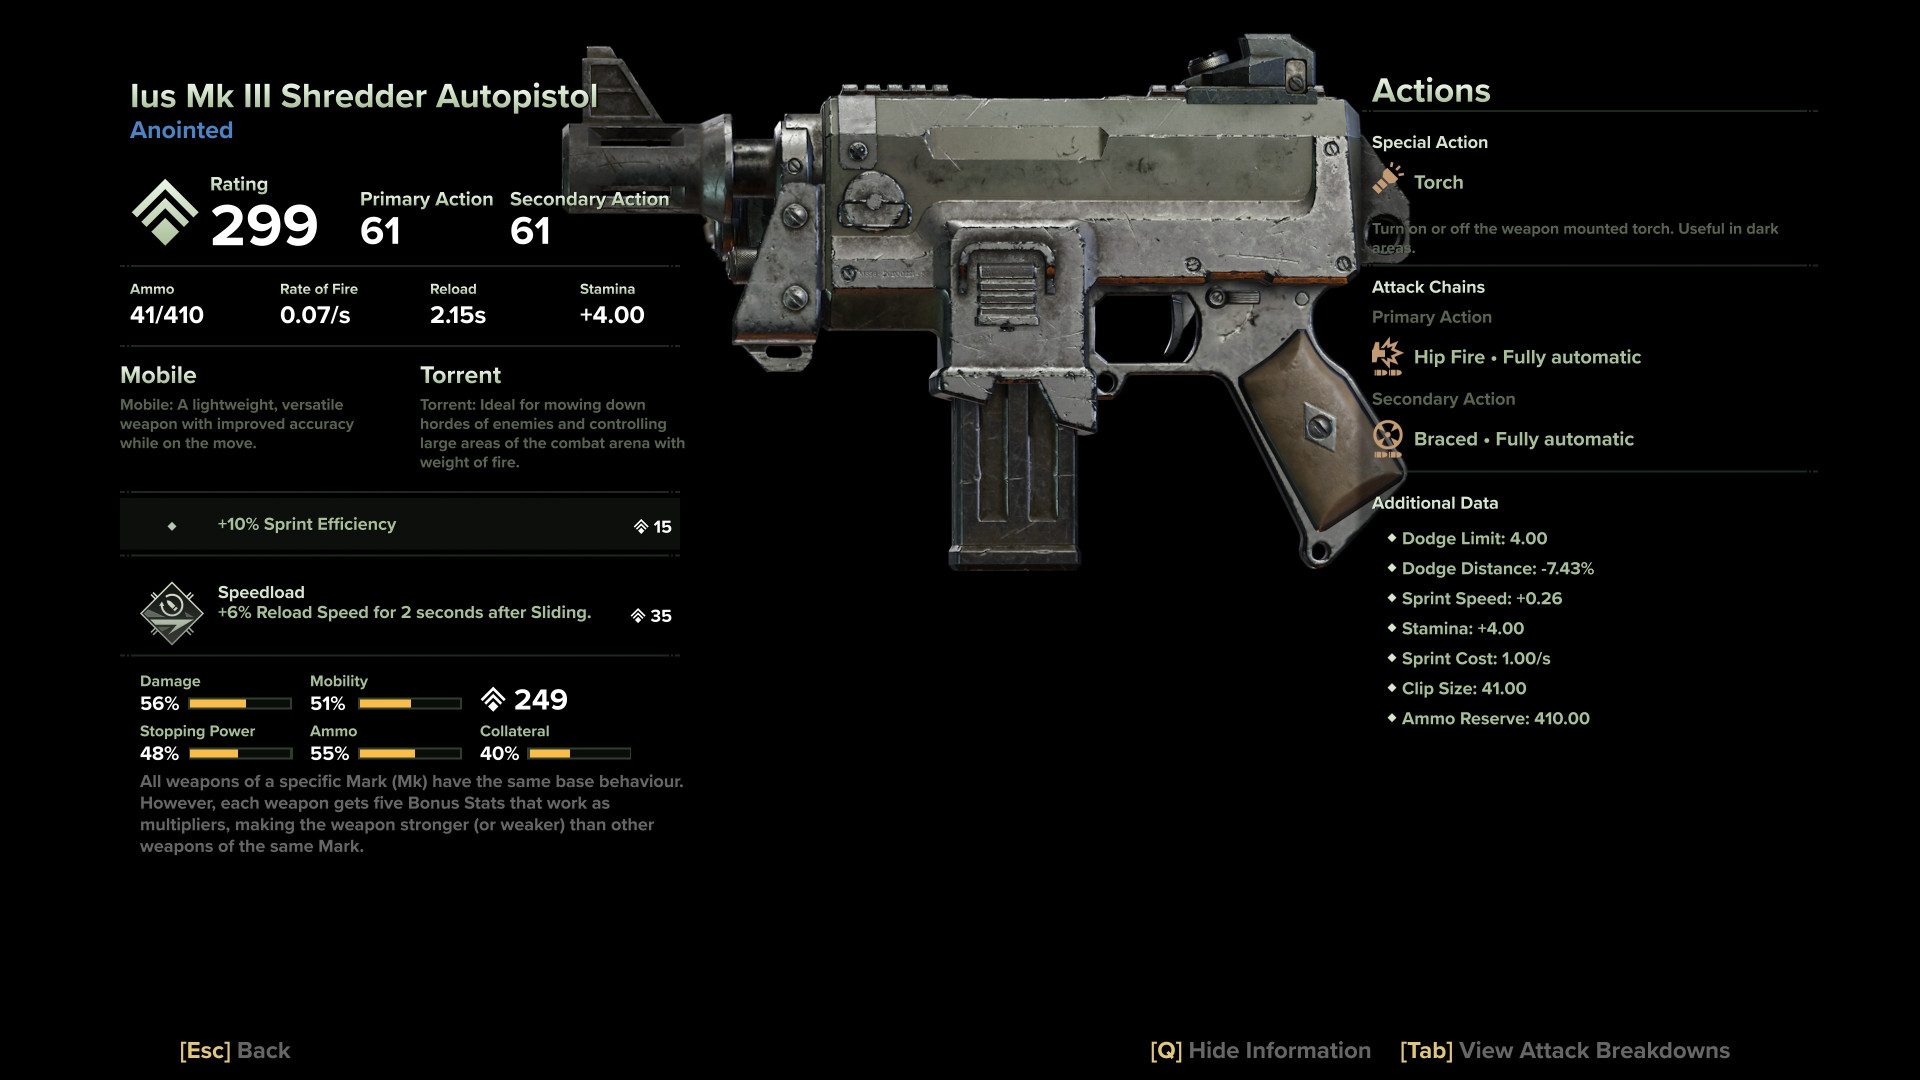 Ius Mk III Shredder Autopistol